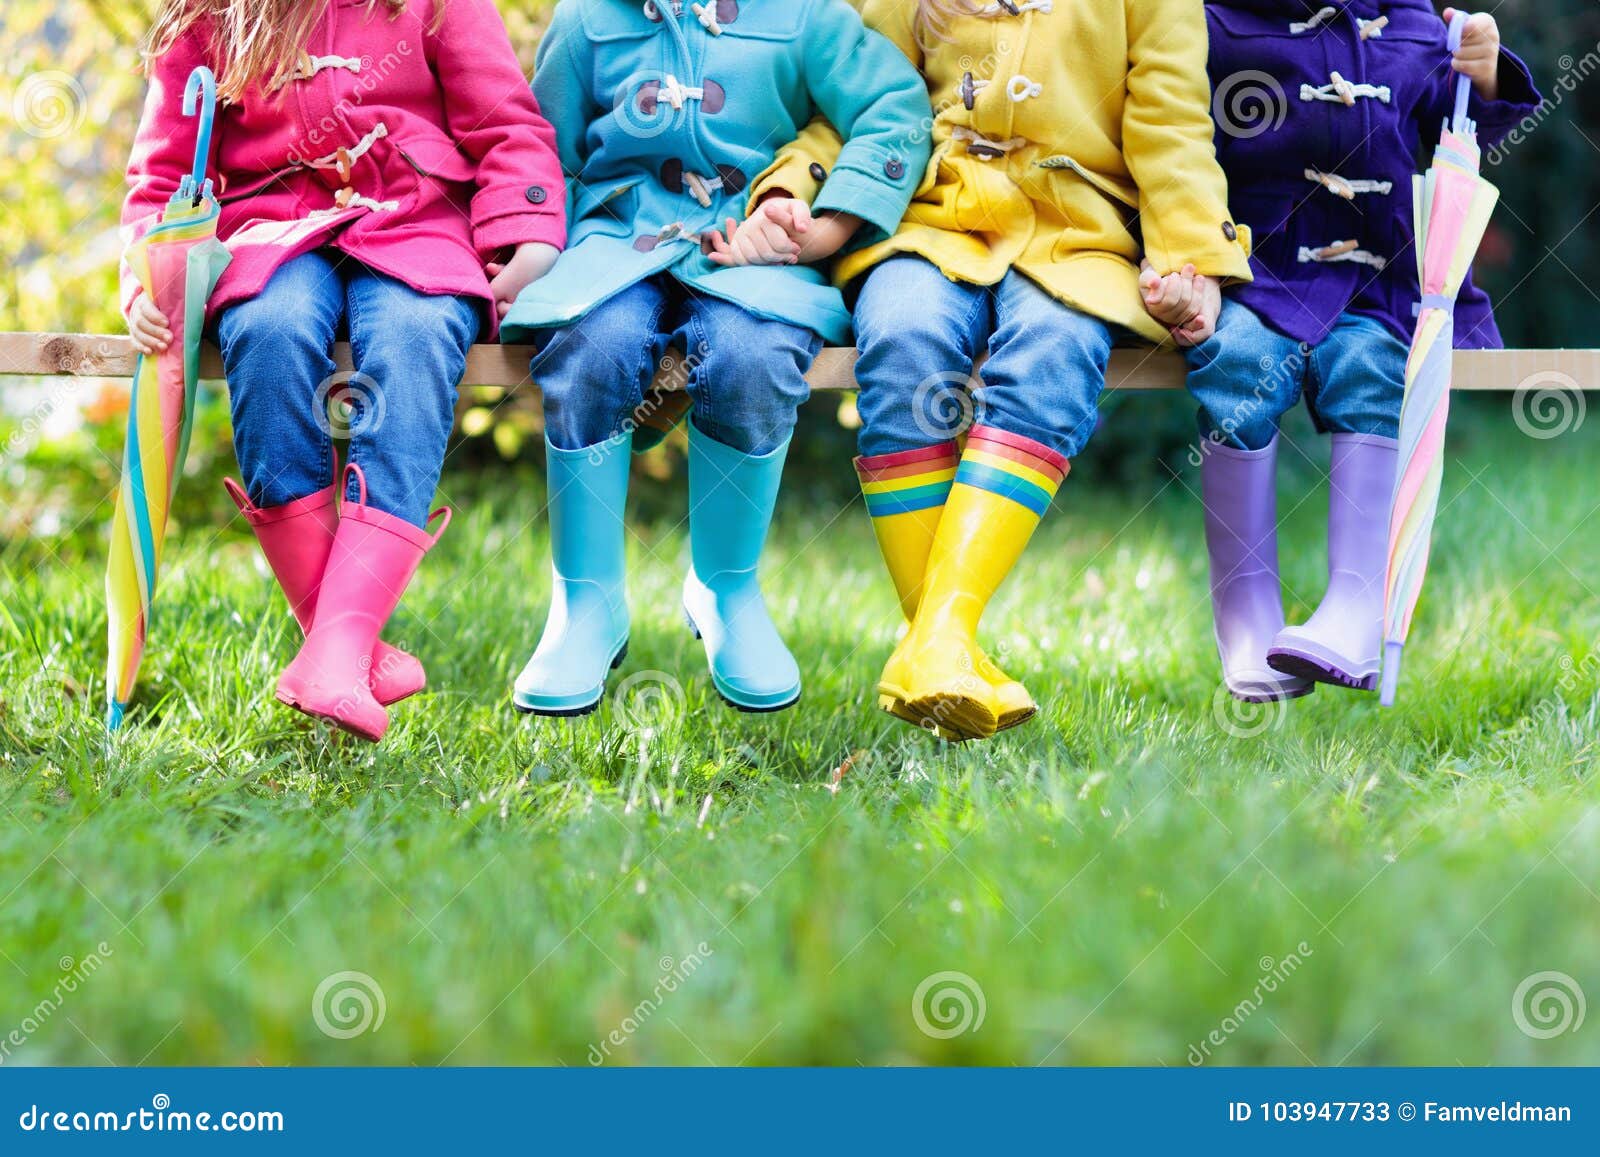 kids in rain boots. foot wear for children.